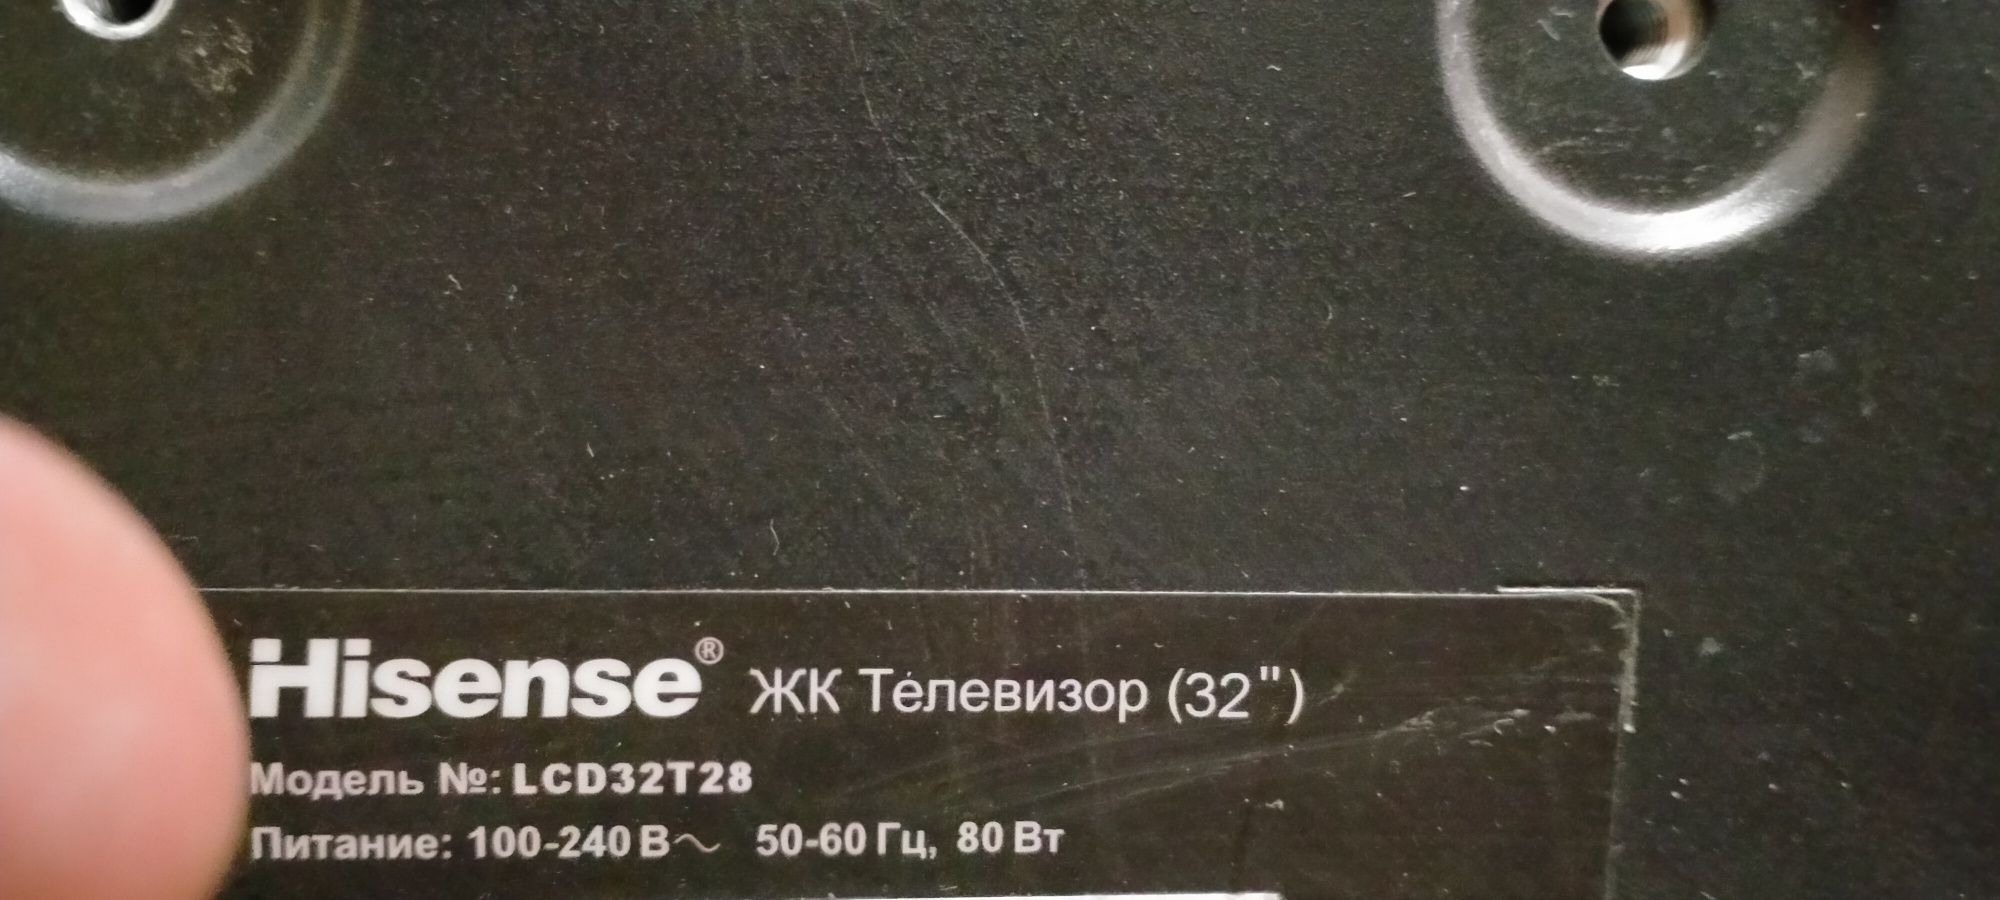 Телевизор Hisense(81cm или 32дюйма по диагонали)